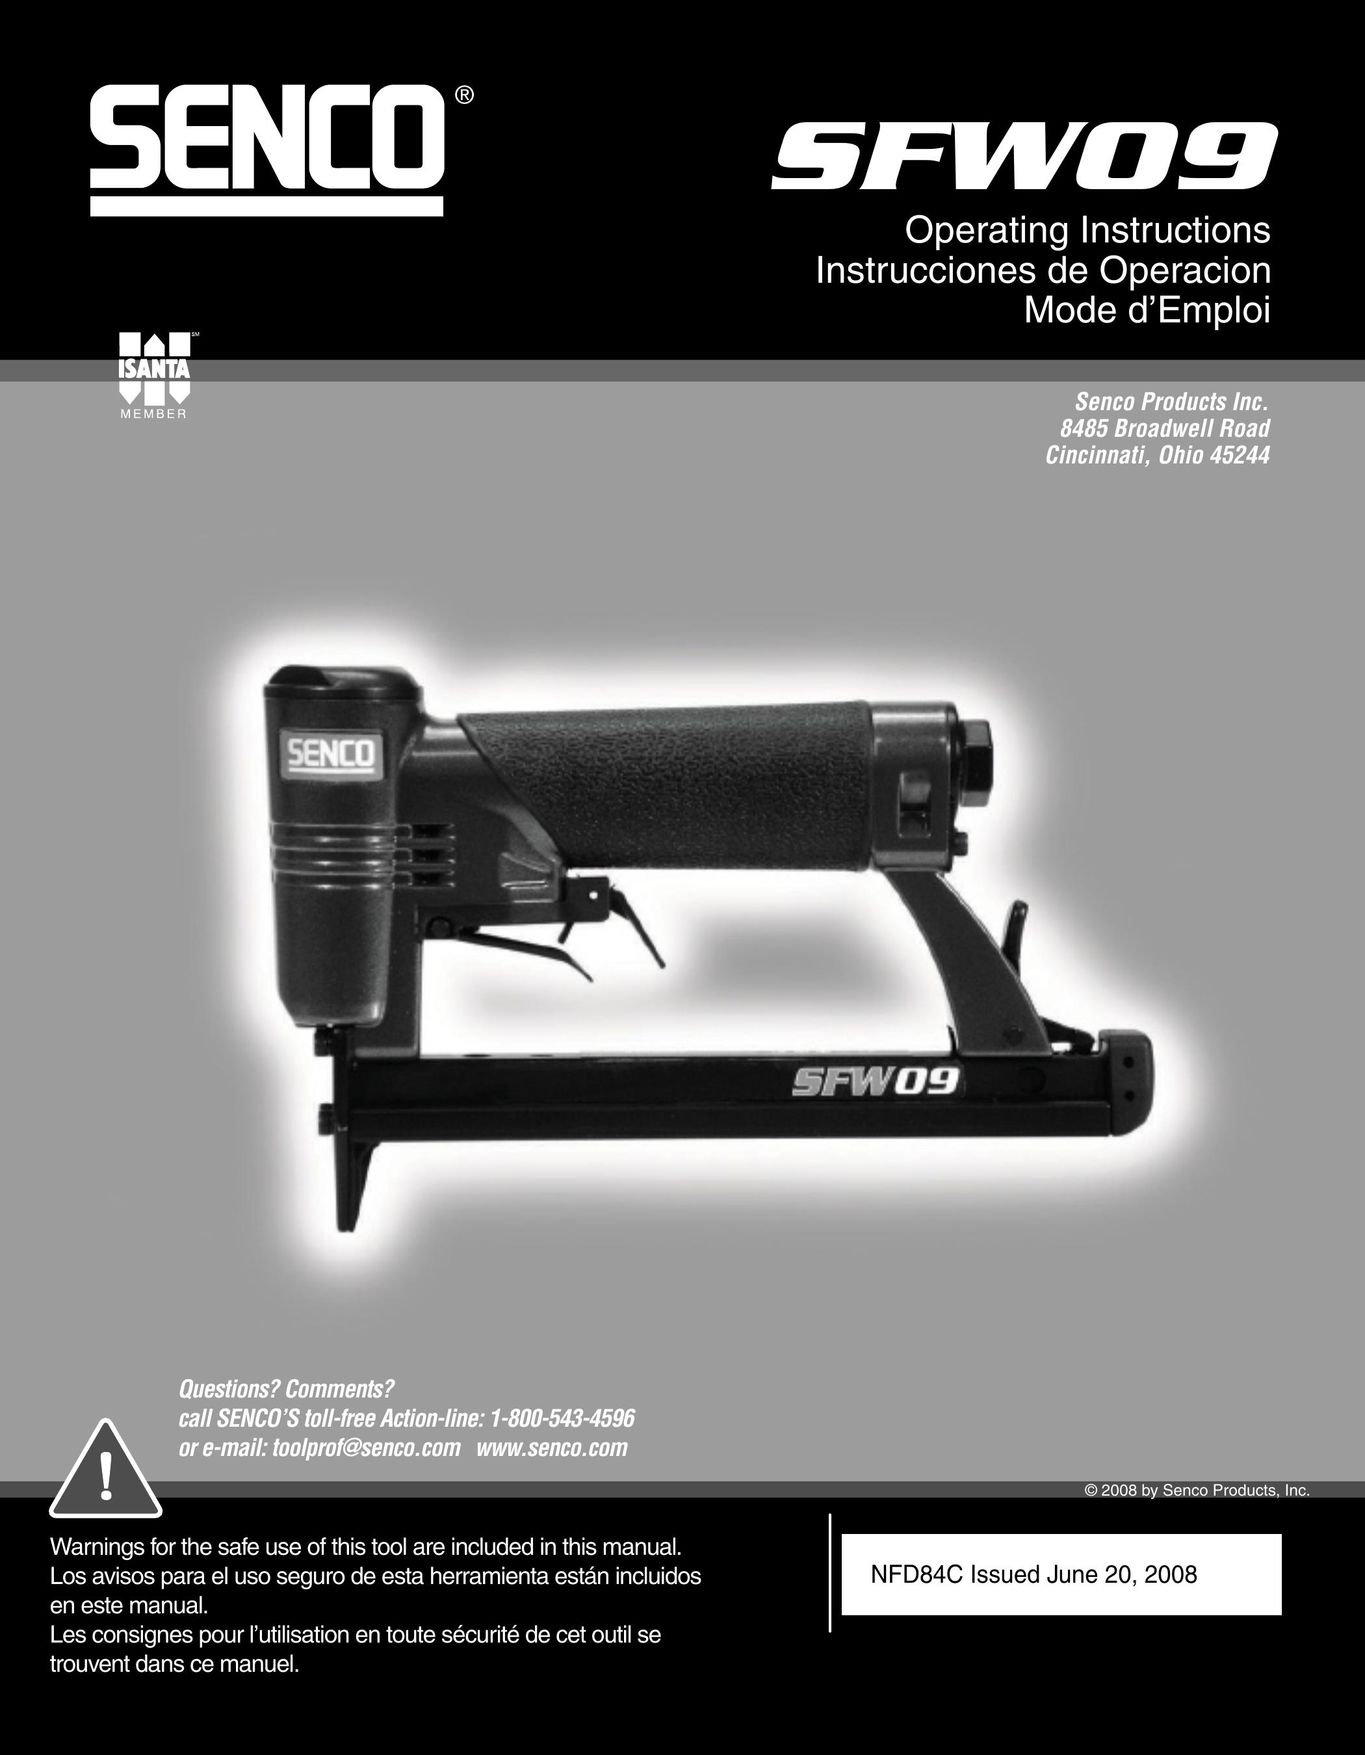 Senco SFW09 Cordless Drill User Manual